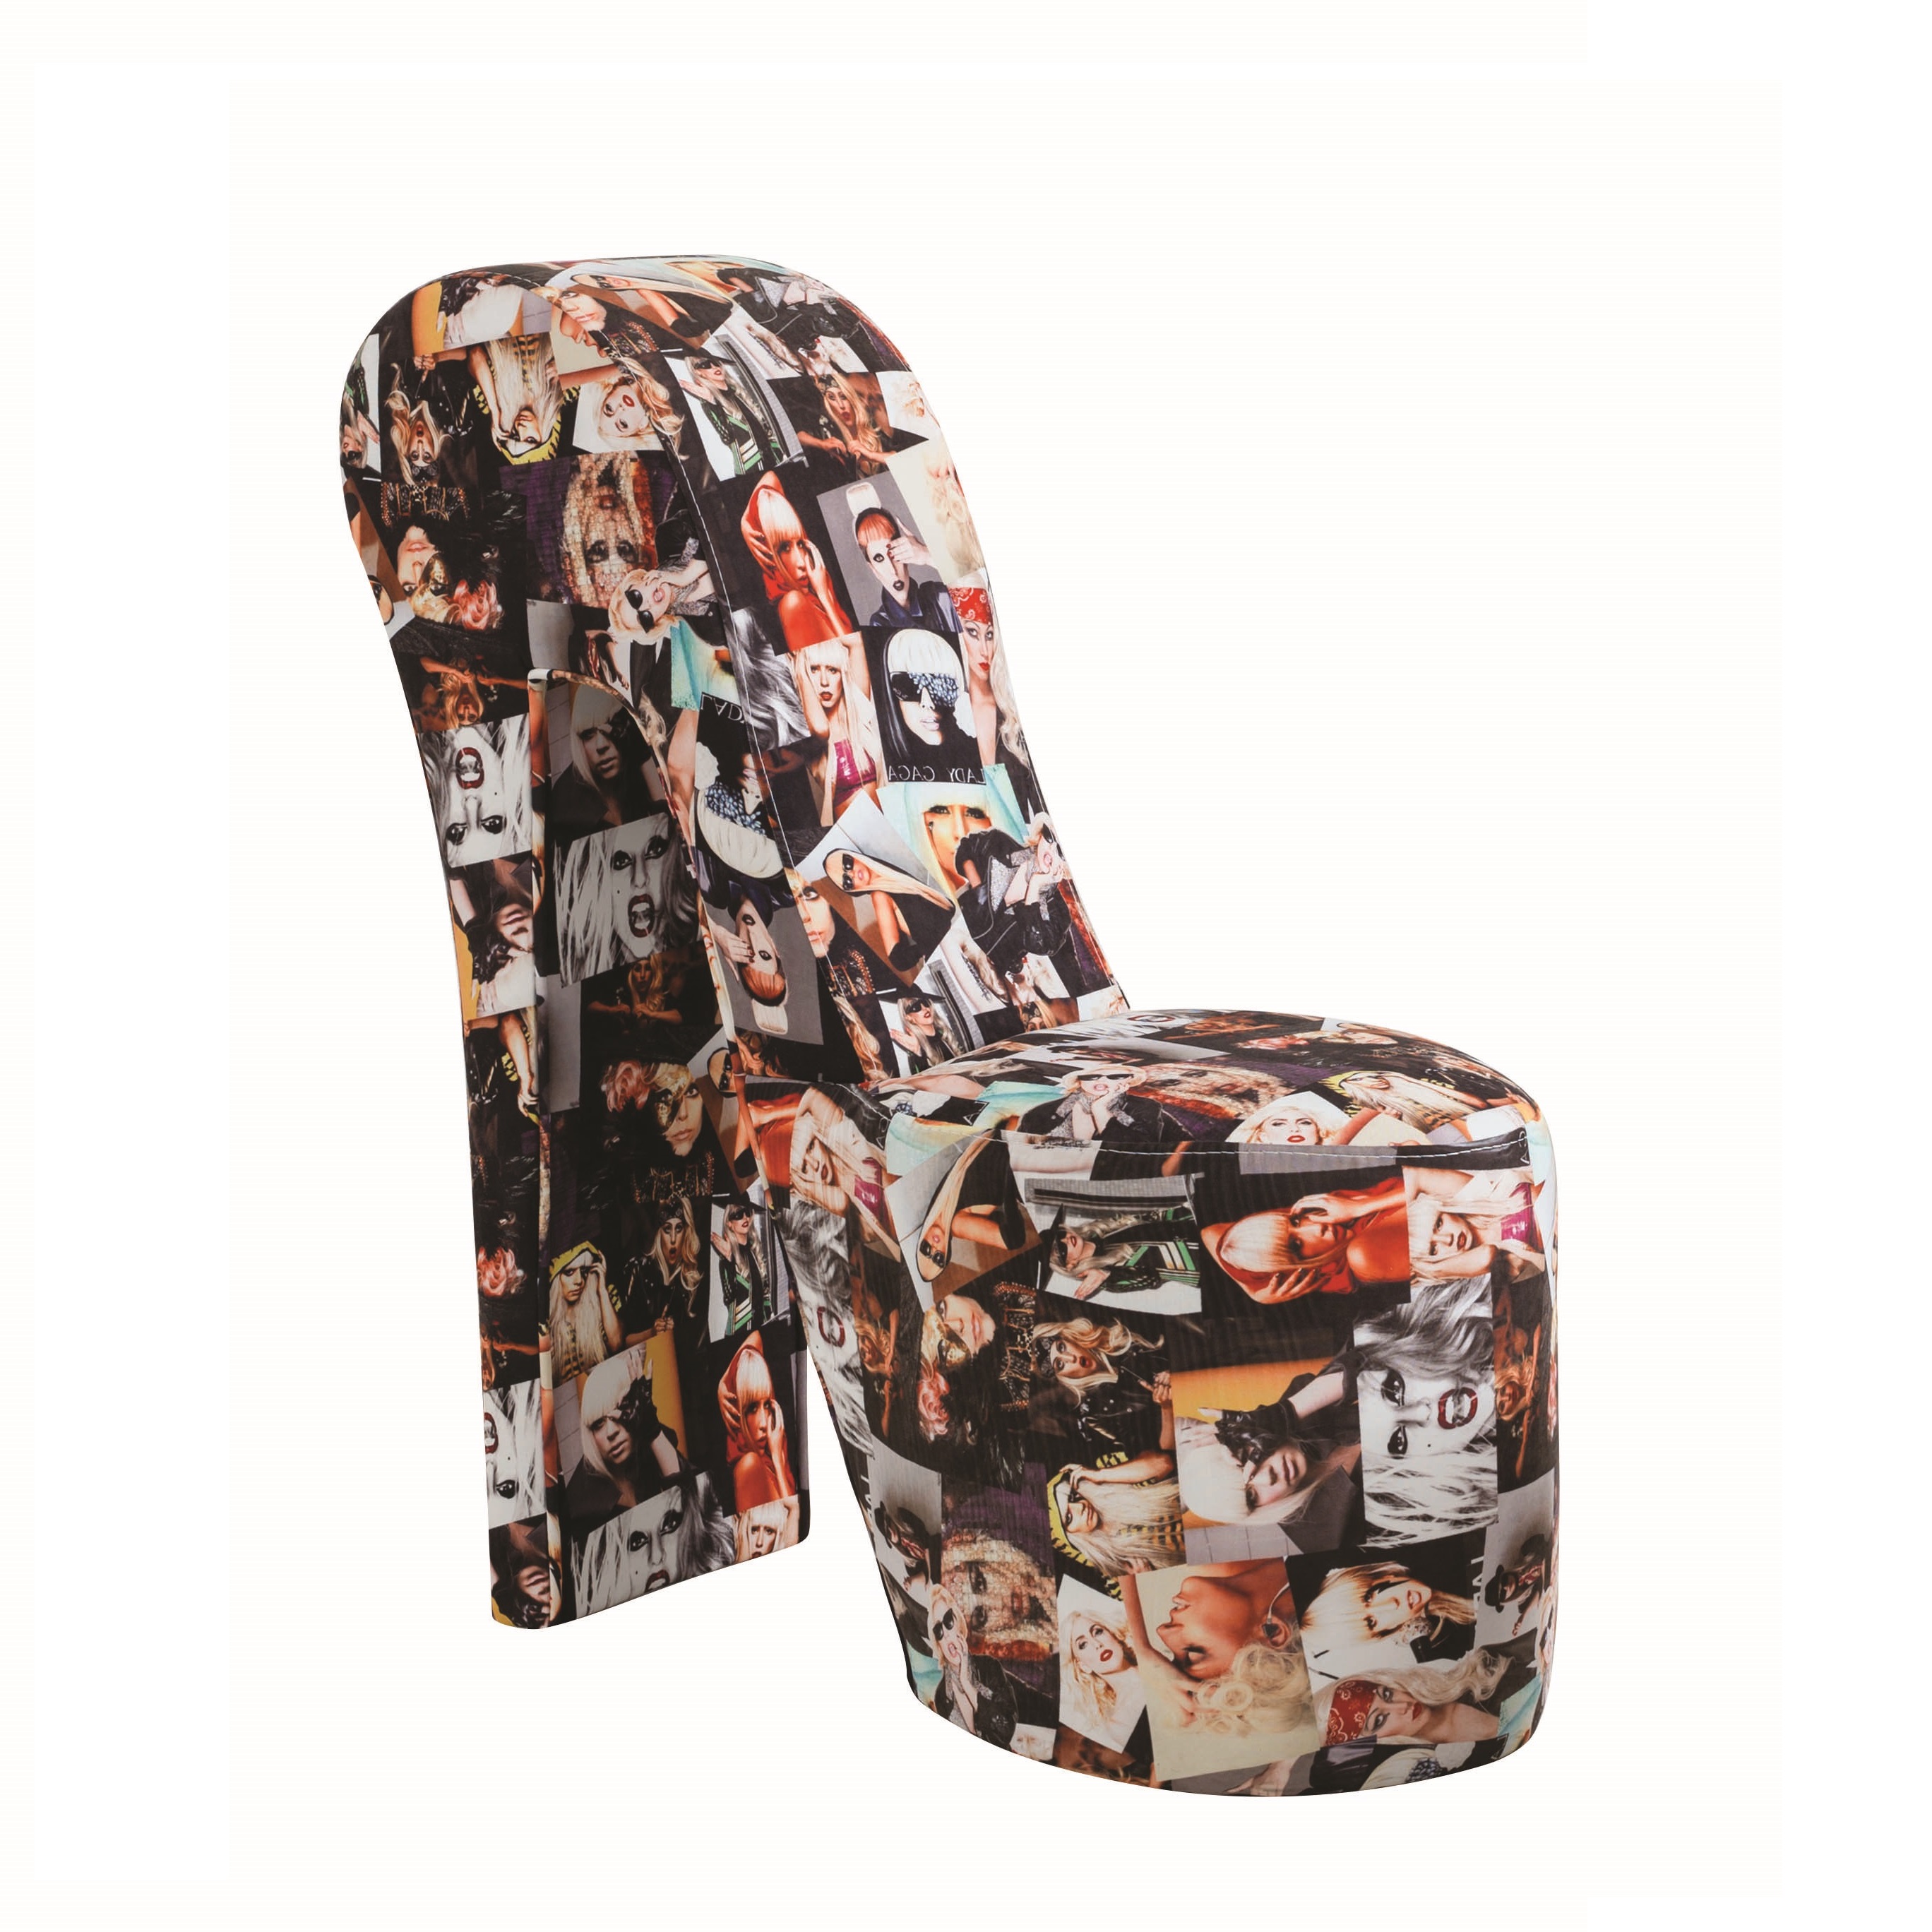 Stiletto Lady Gaga Print Novelty Chair